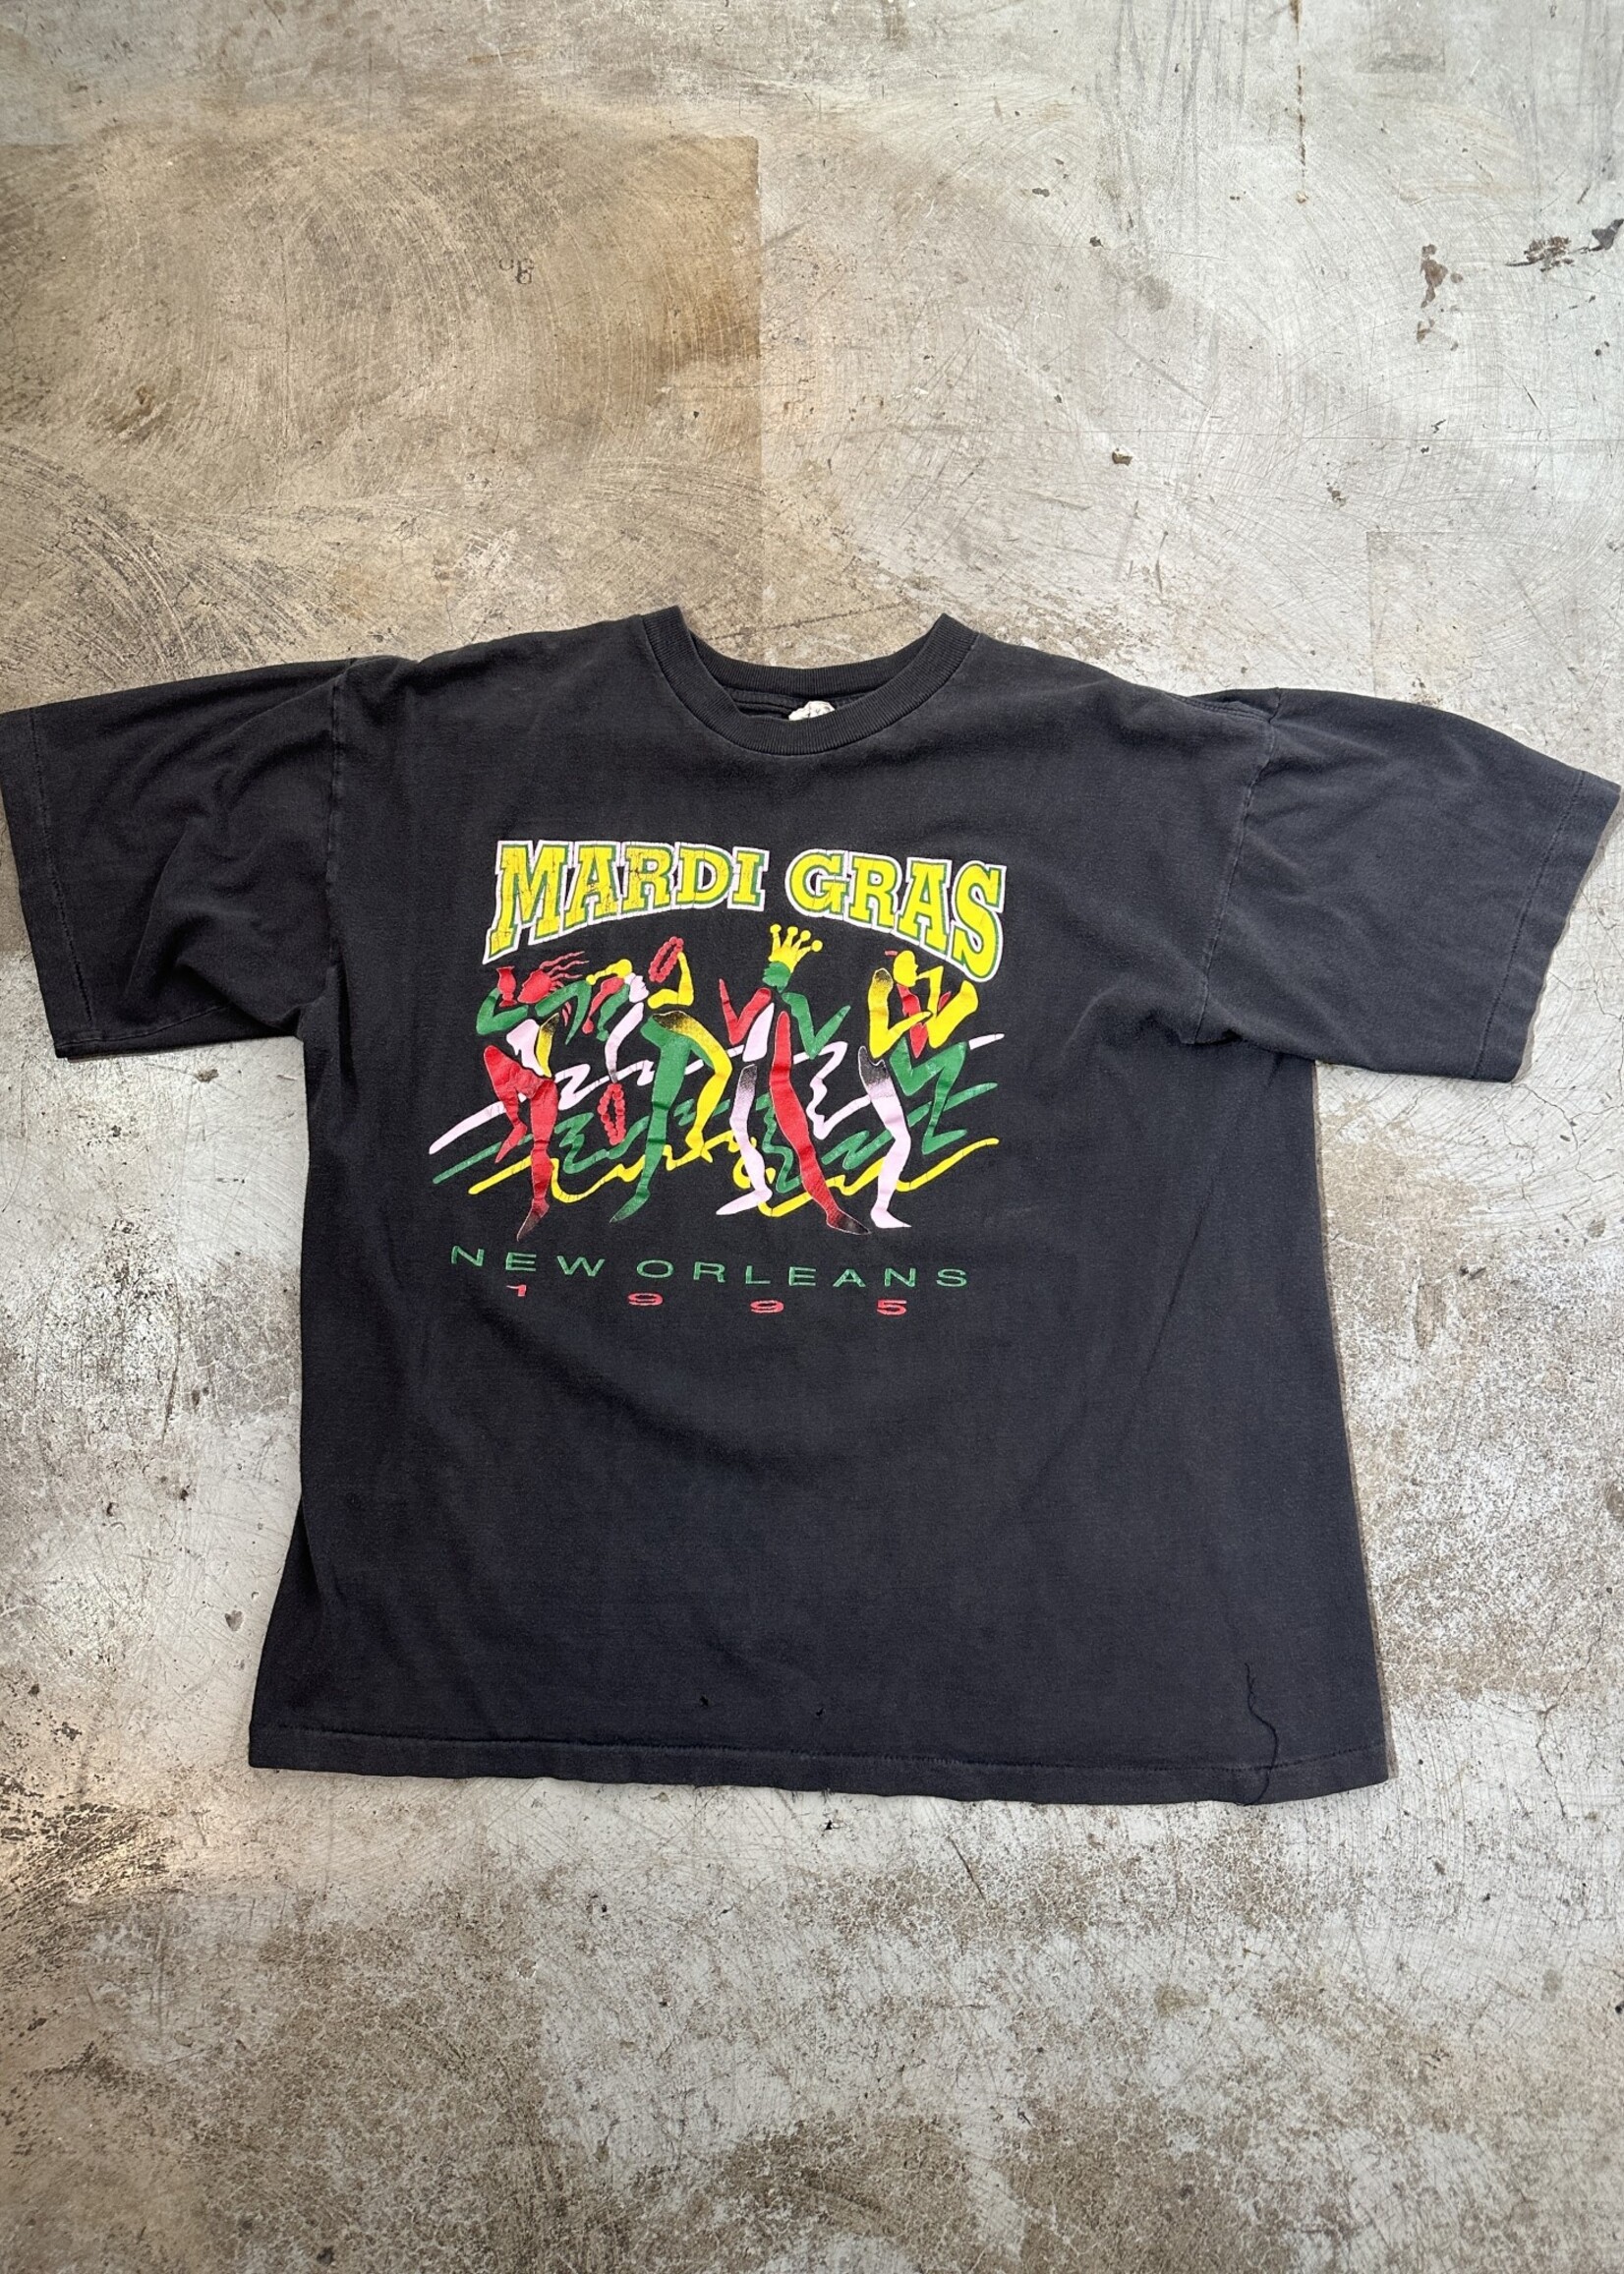 Vintage 1995 Mardi Gras T-shirt XL